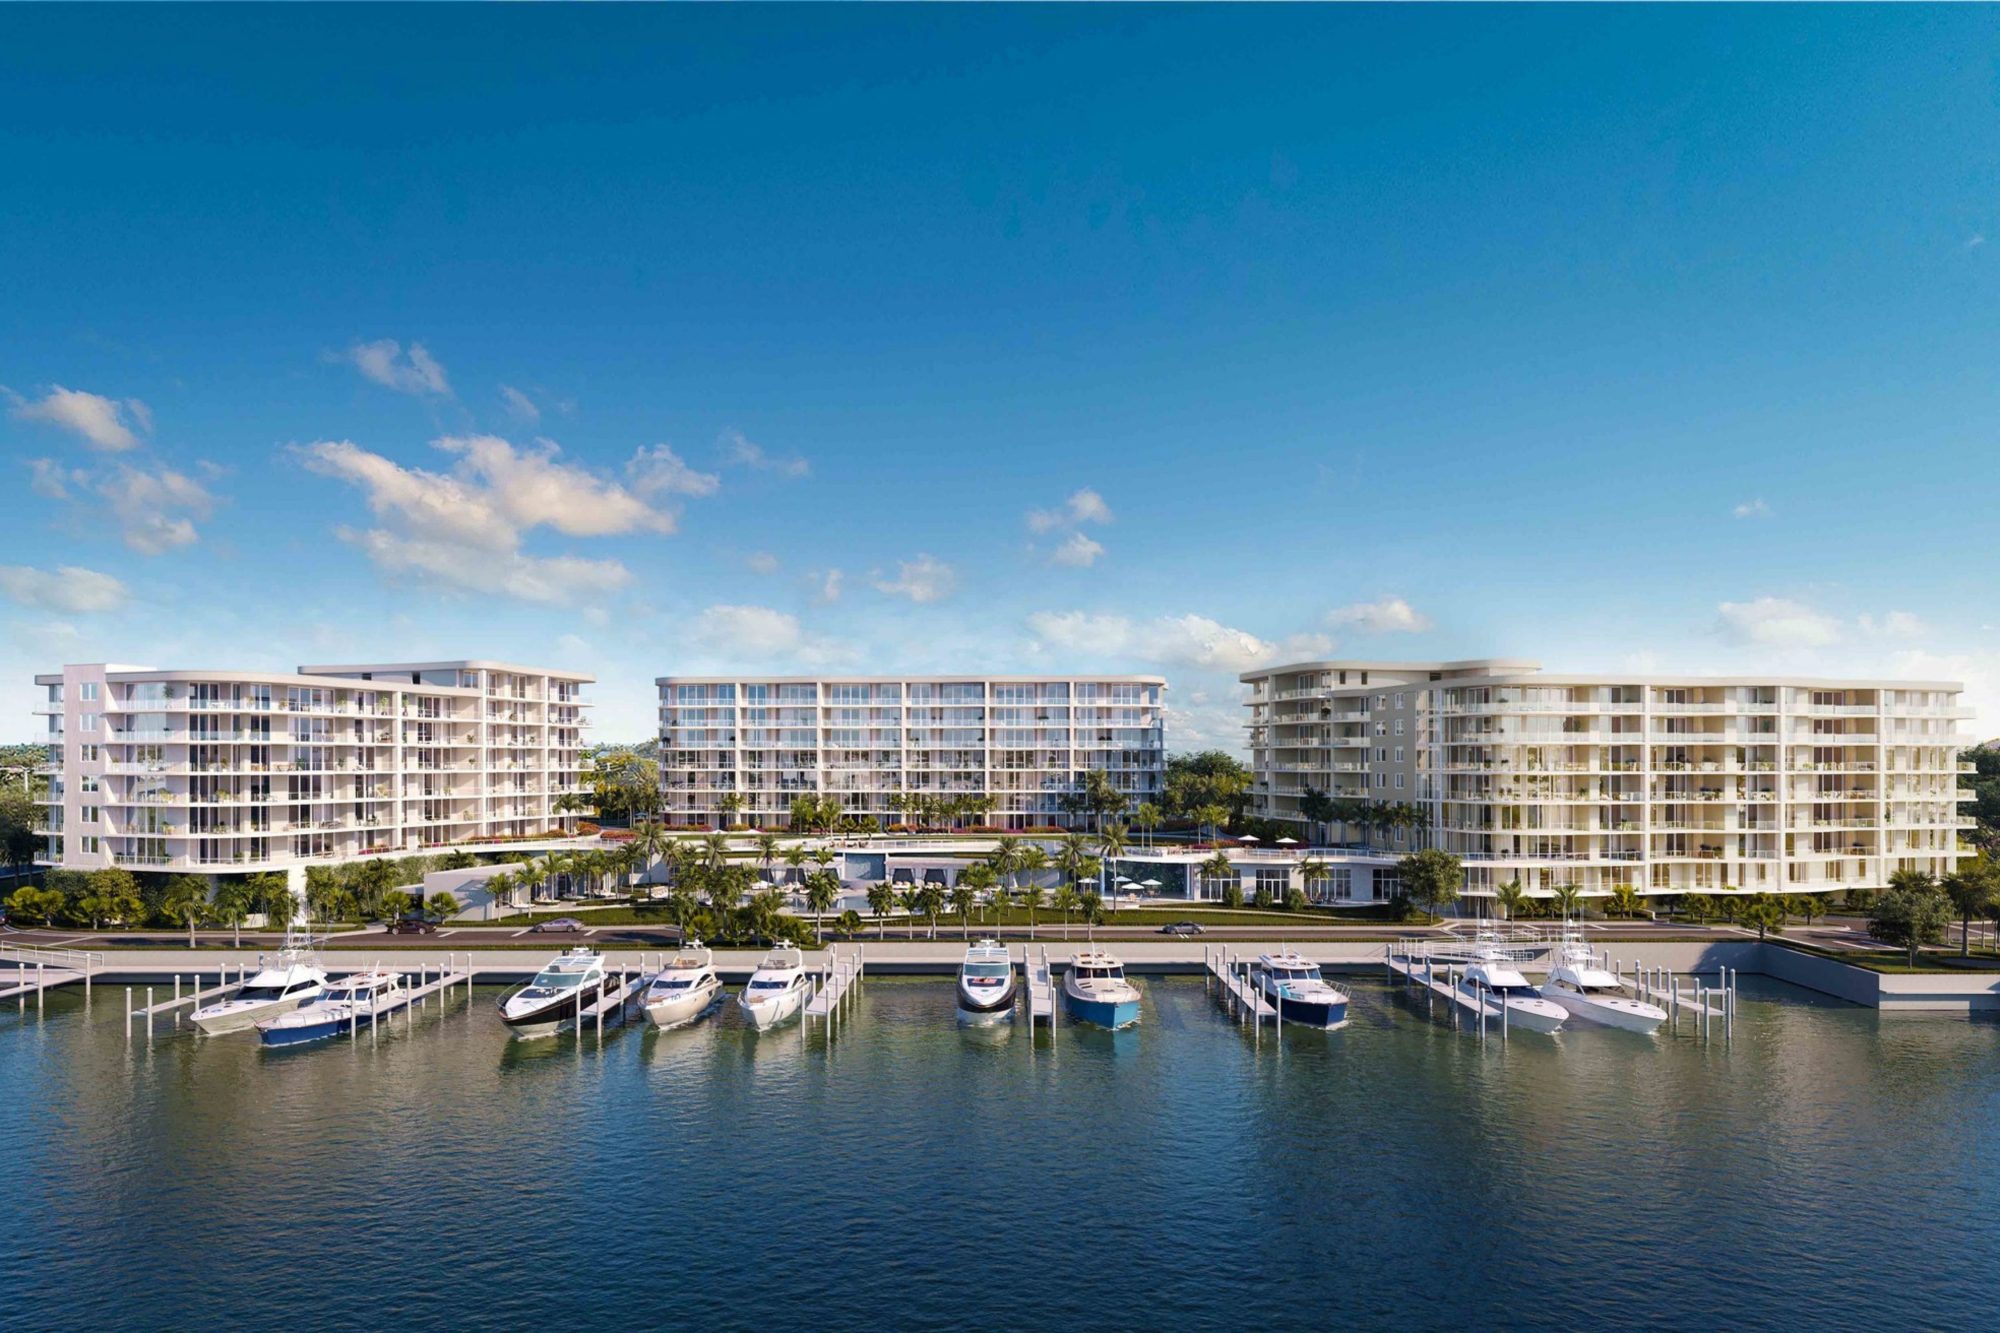 Coastal elegance meets modern luxury at The Ritz-Carlton Residences, Palm Beach Gardens